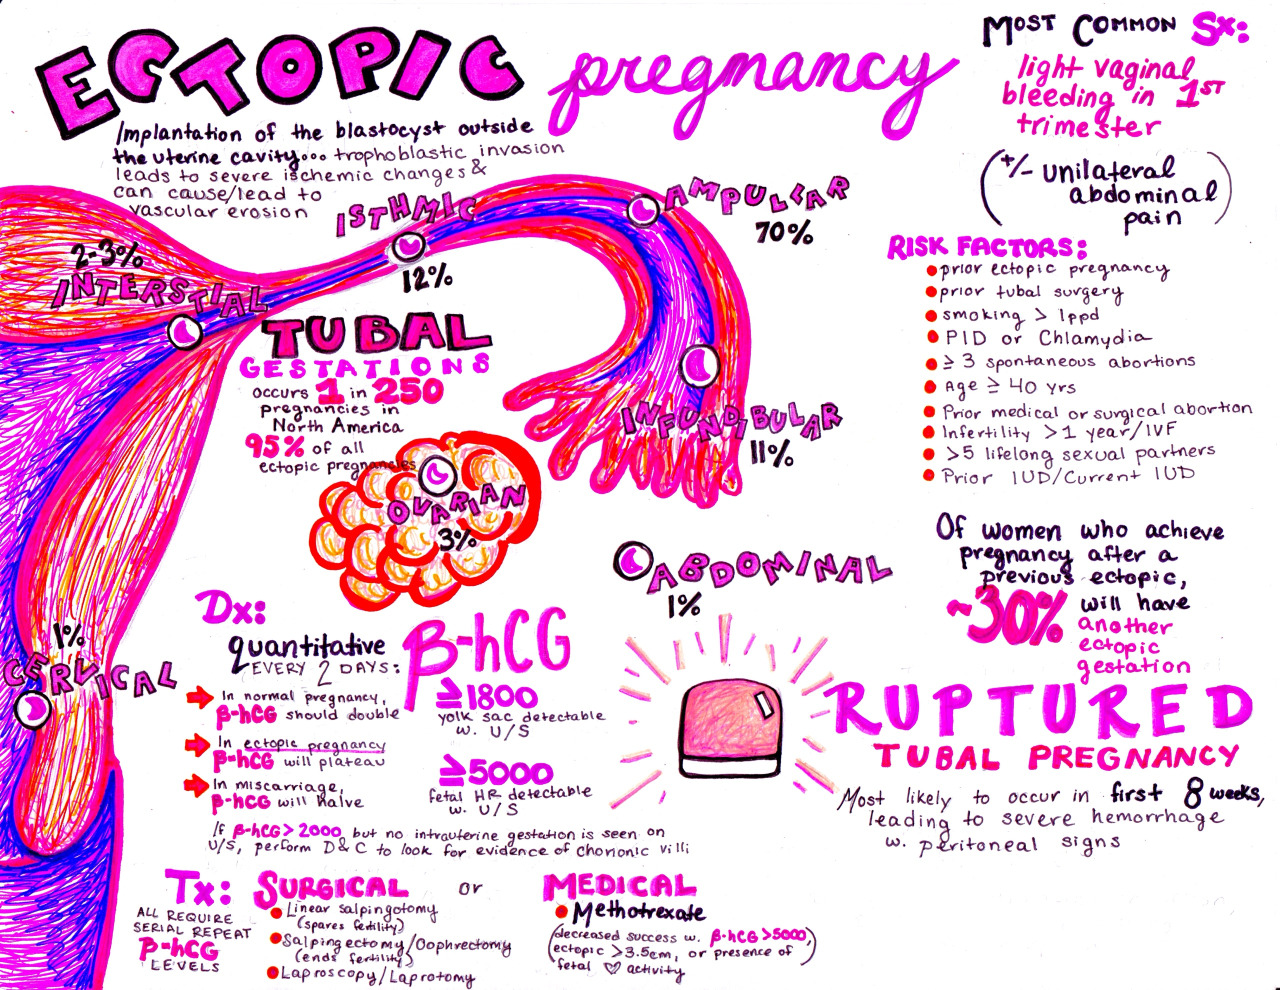 emdocs-emergency-medicine-educationobcast-ectopic-pregnancy